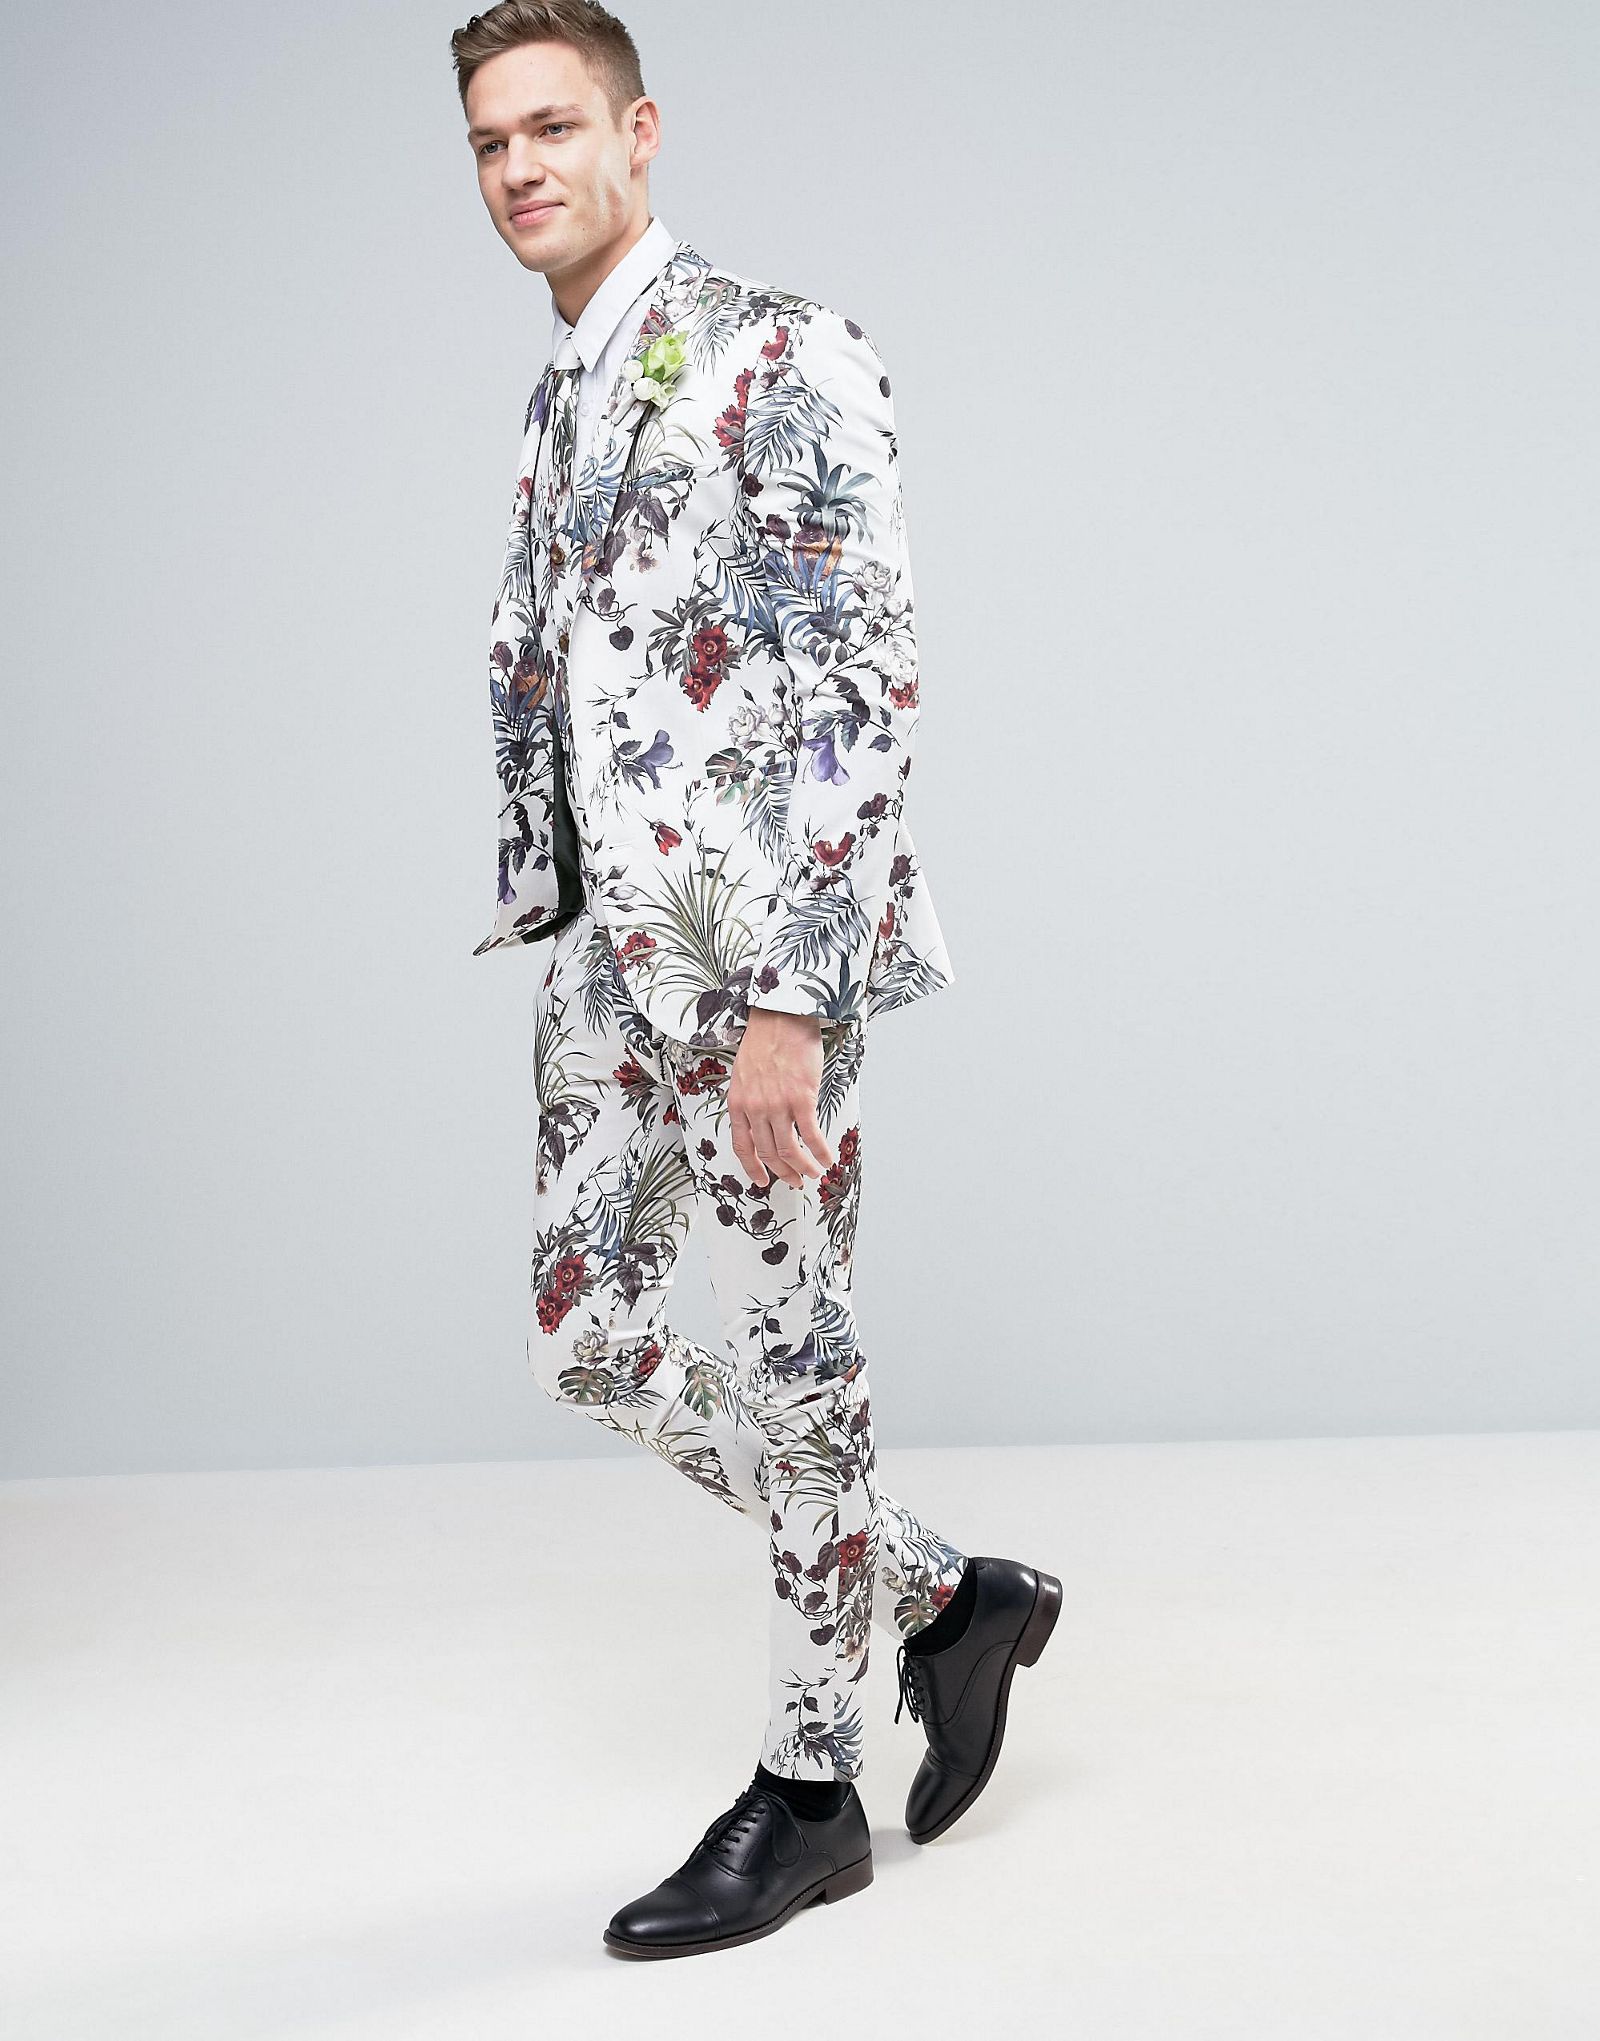 ASOS WEDDING Super Skinny Suit Pant in Cream Floral Print